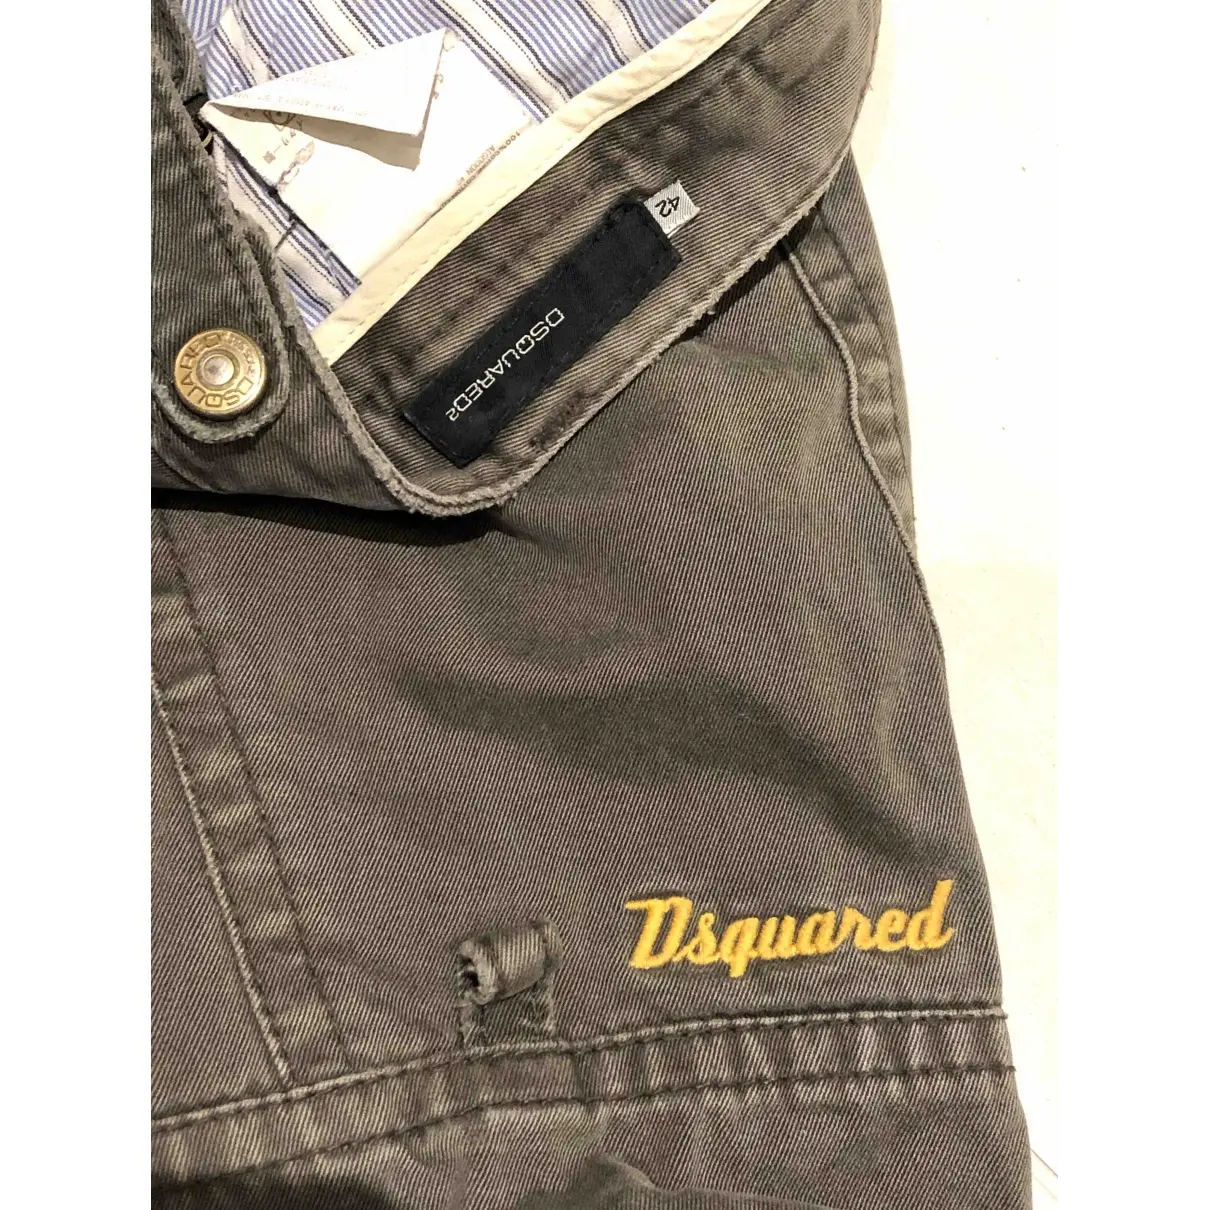 Buy Dsquared2 Slim pants online